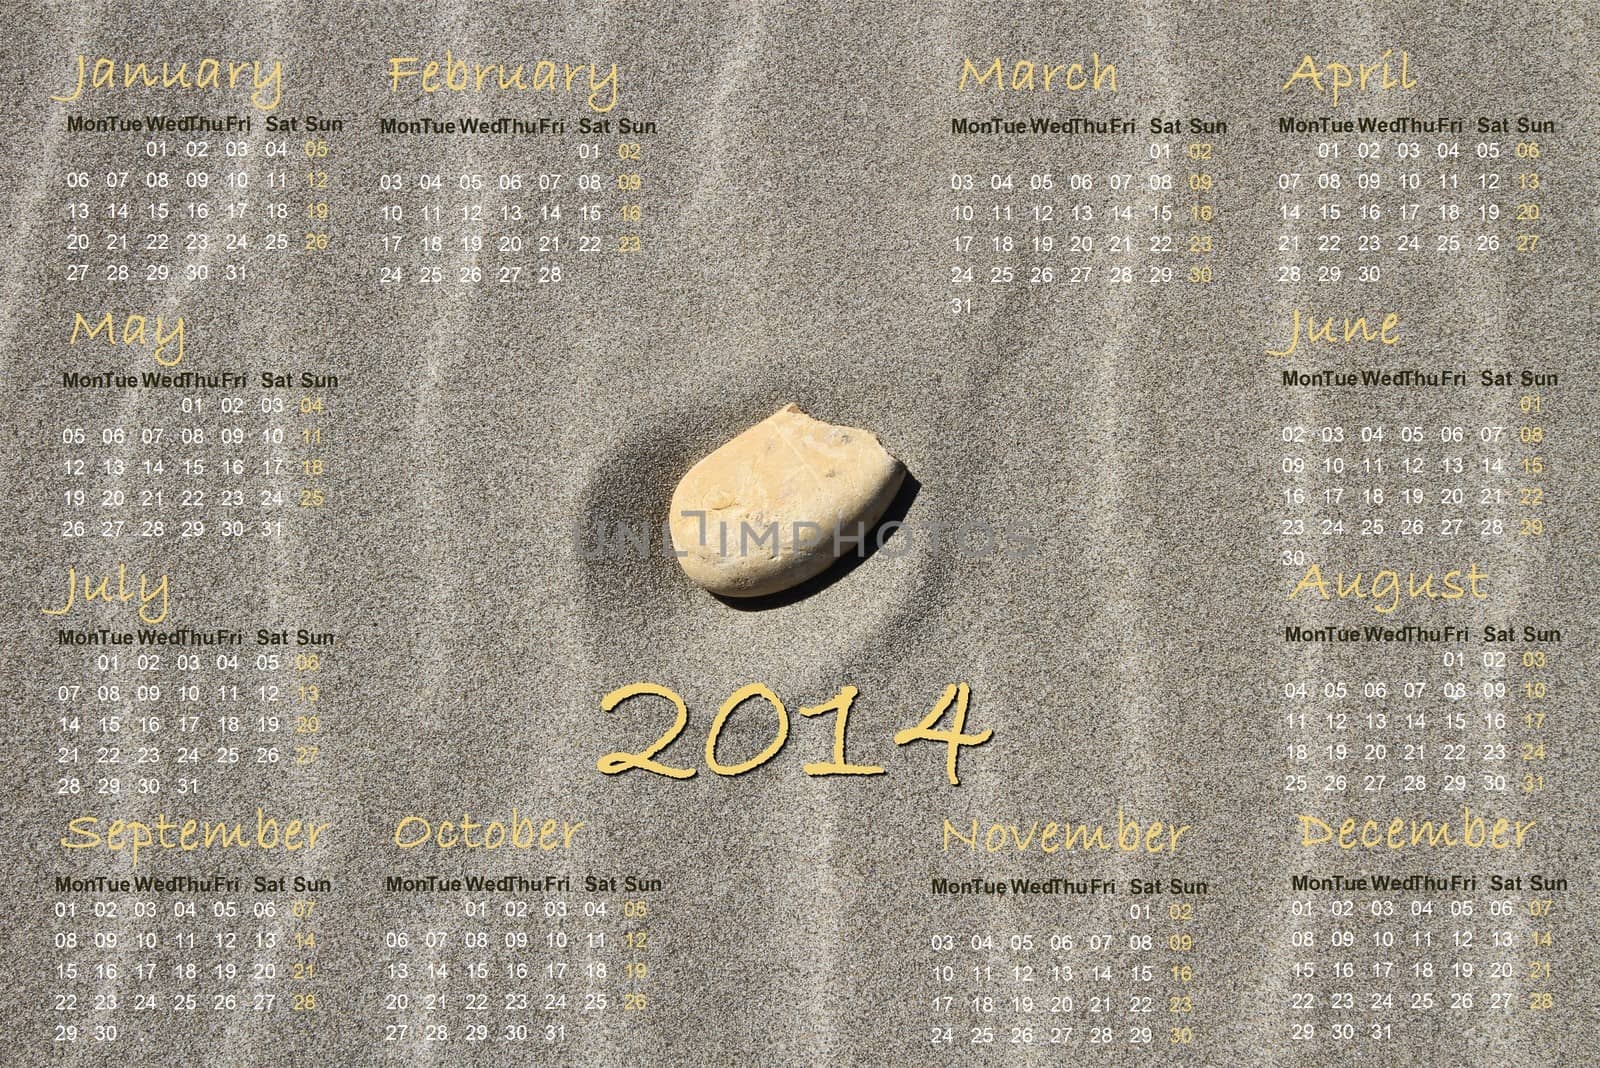 2014 english calendar with stone on sand by Elenaphotos21